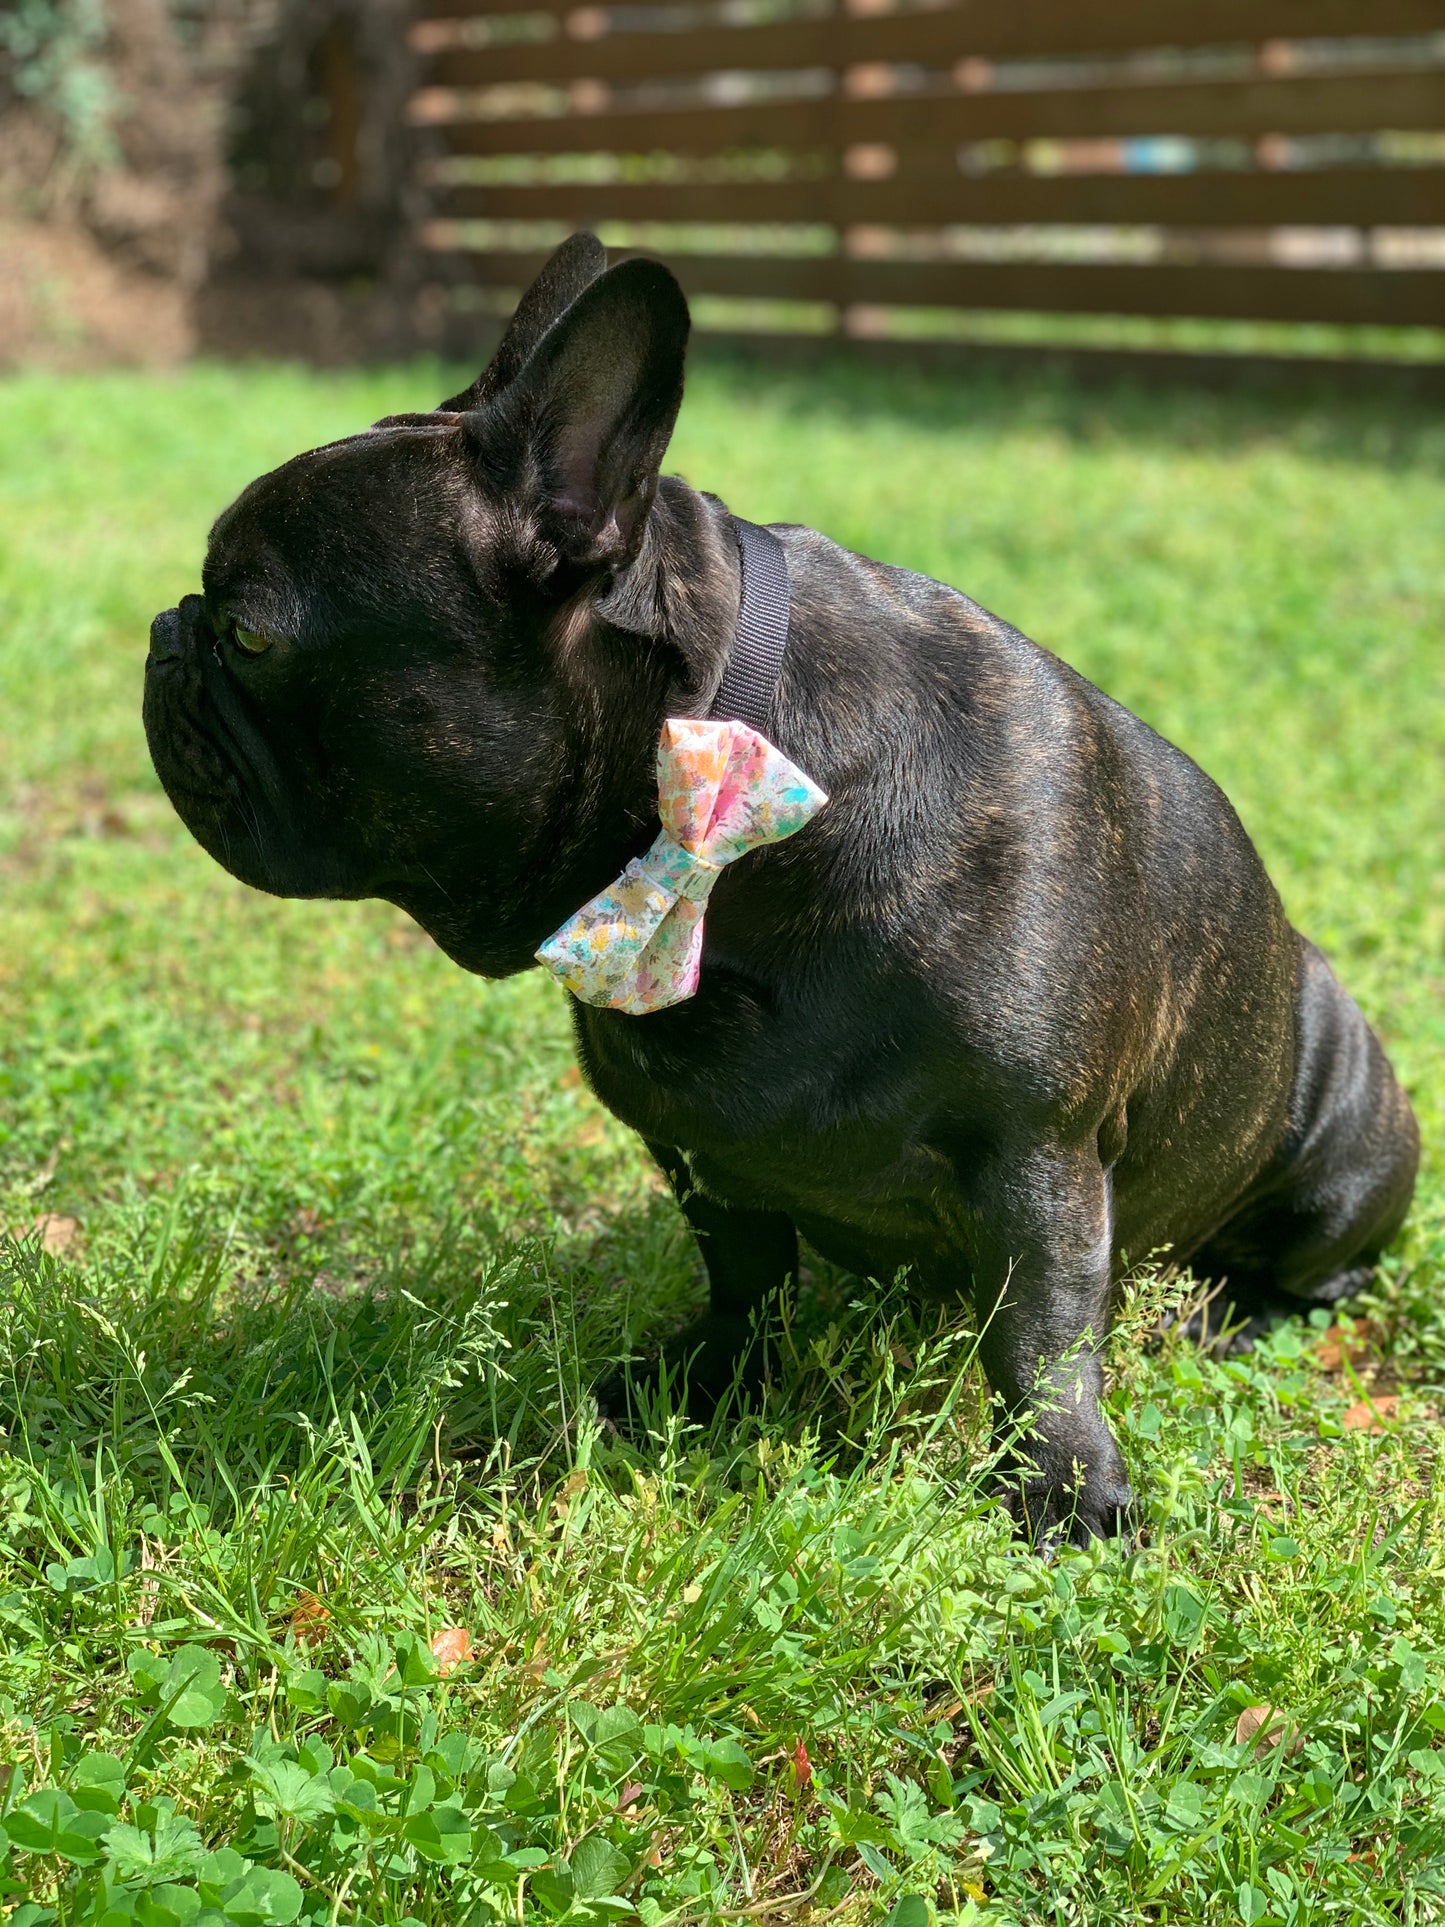 Sparkly Floral - Pet Bow Tie